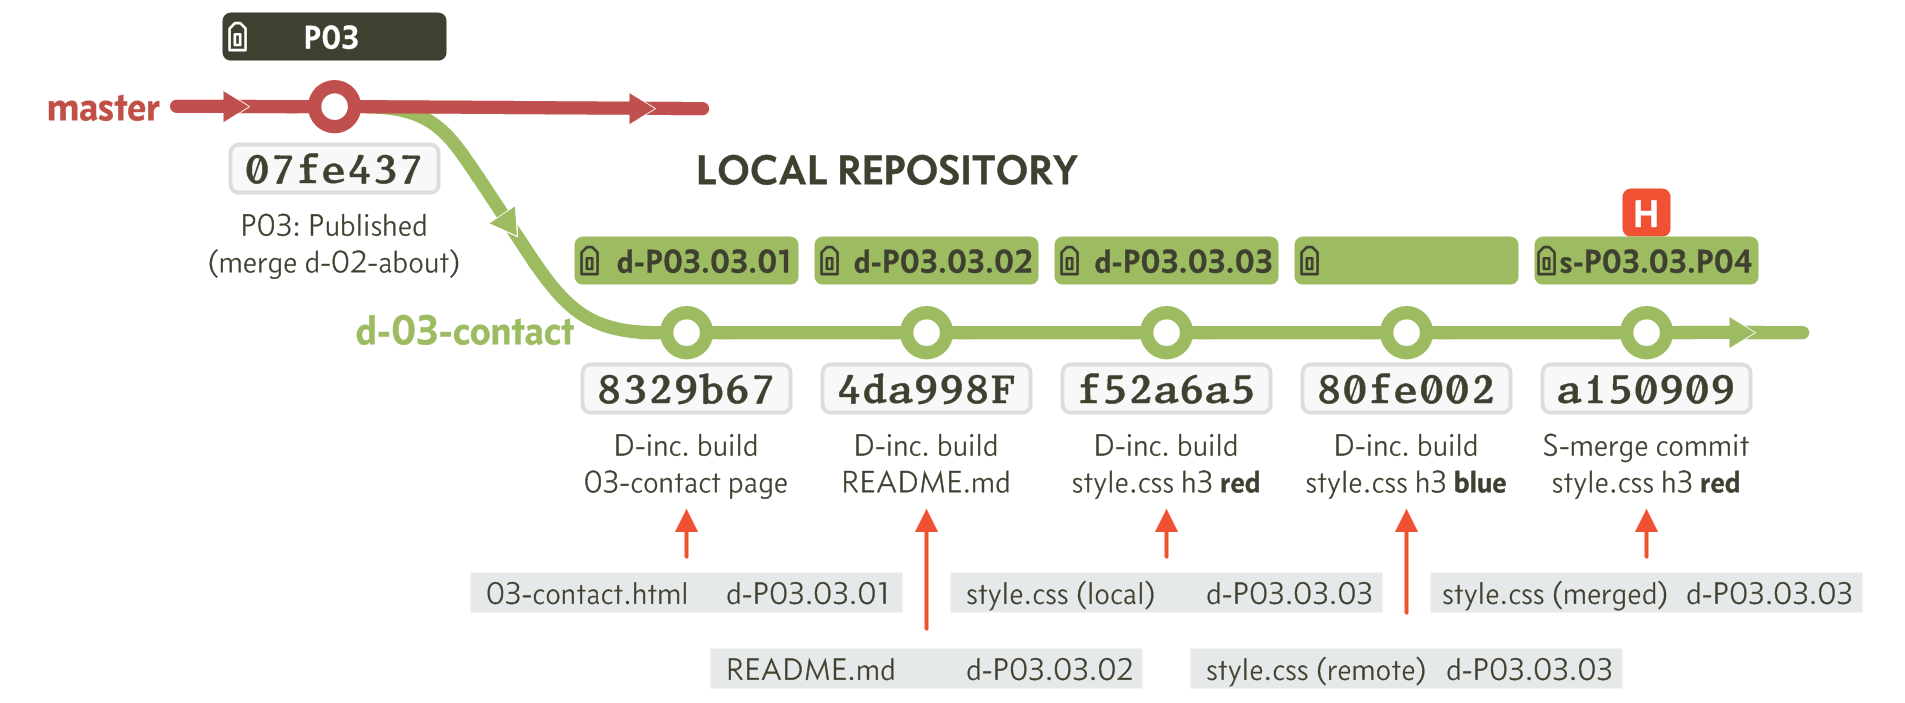 Figure 8.59 - Brackets—local workflow after merge